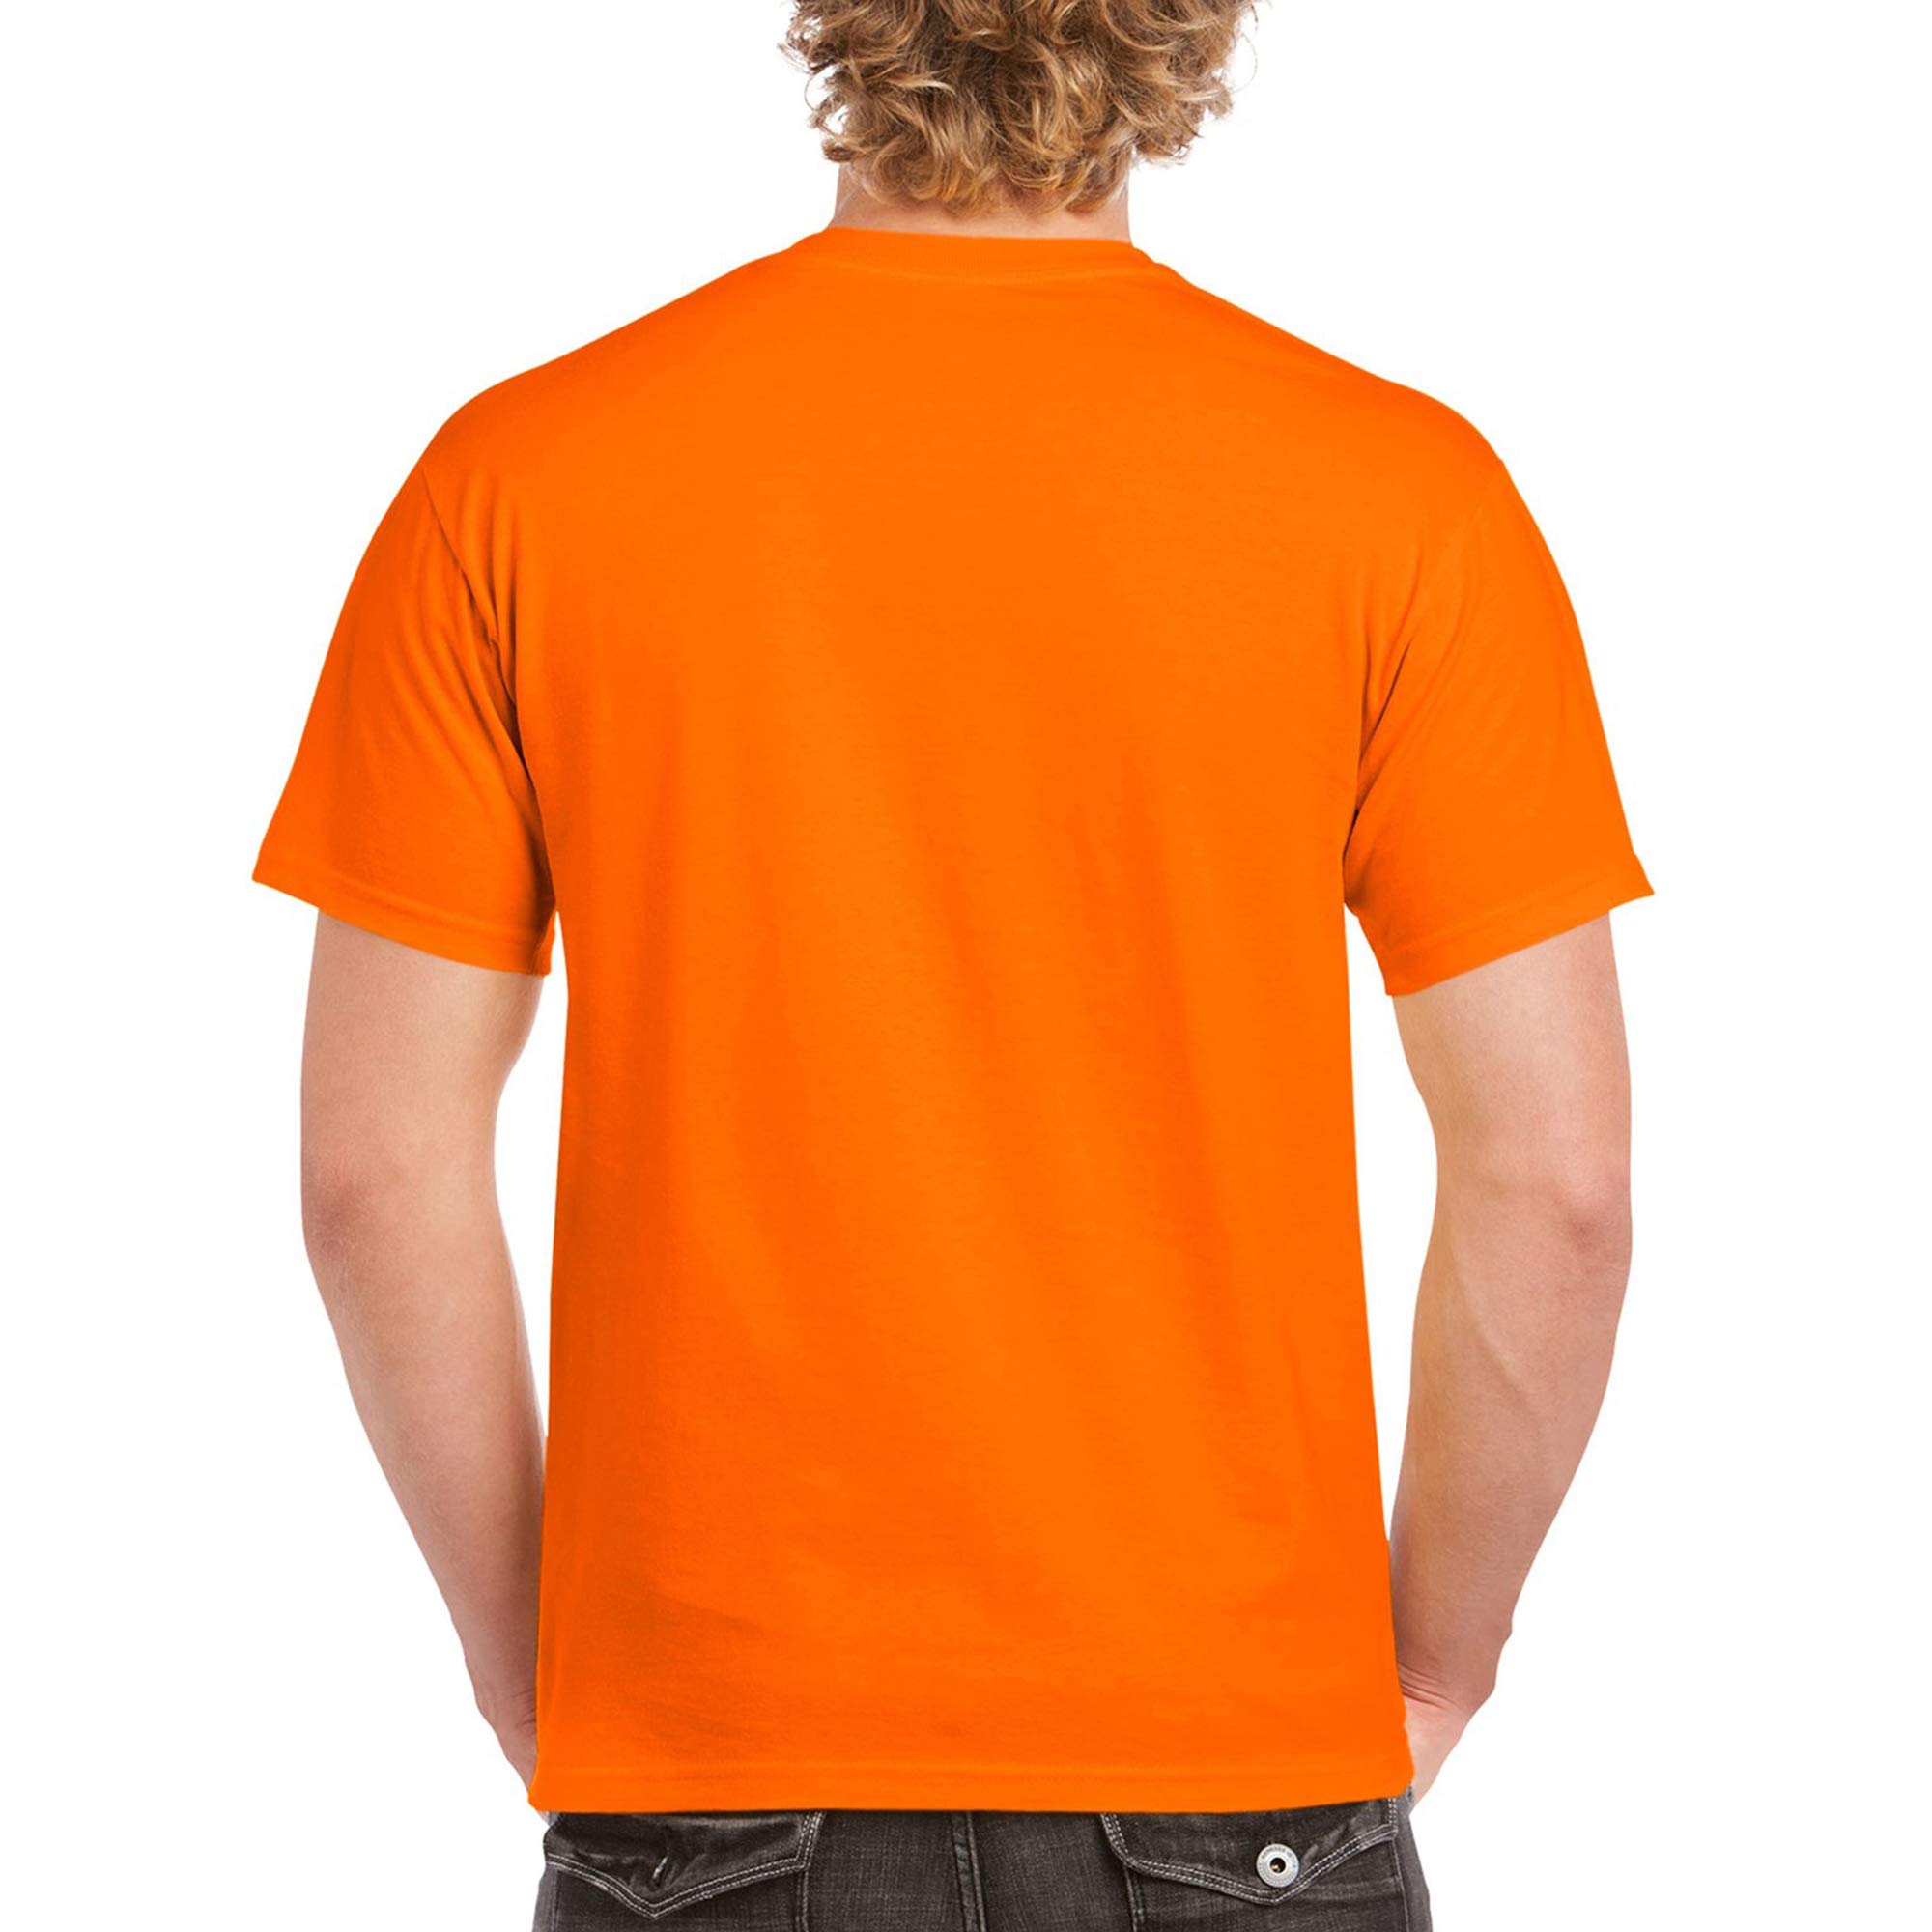 Gildan mens Heavy Cotton T-shirt, Style G5000, Multipack Shirt, Safety Orange (2-pack), Large US